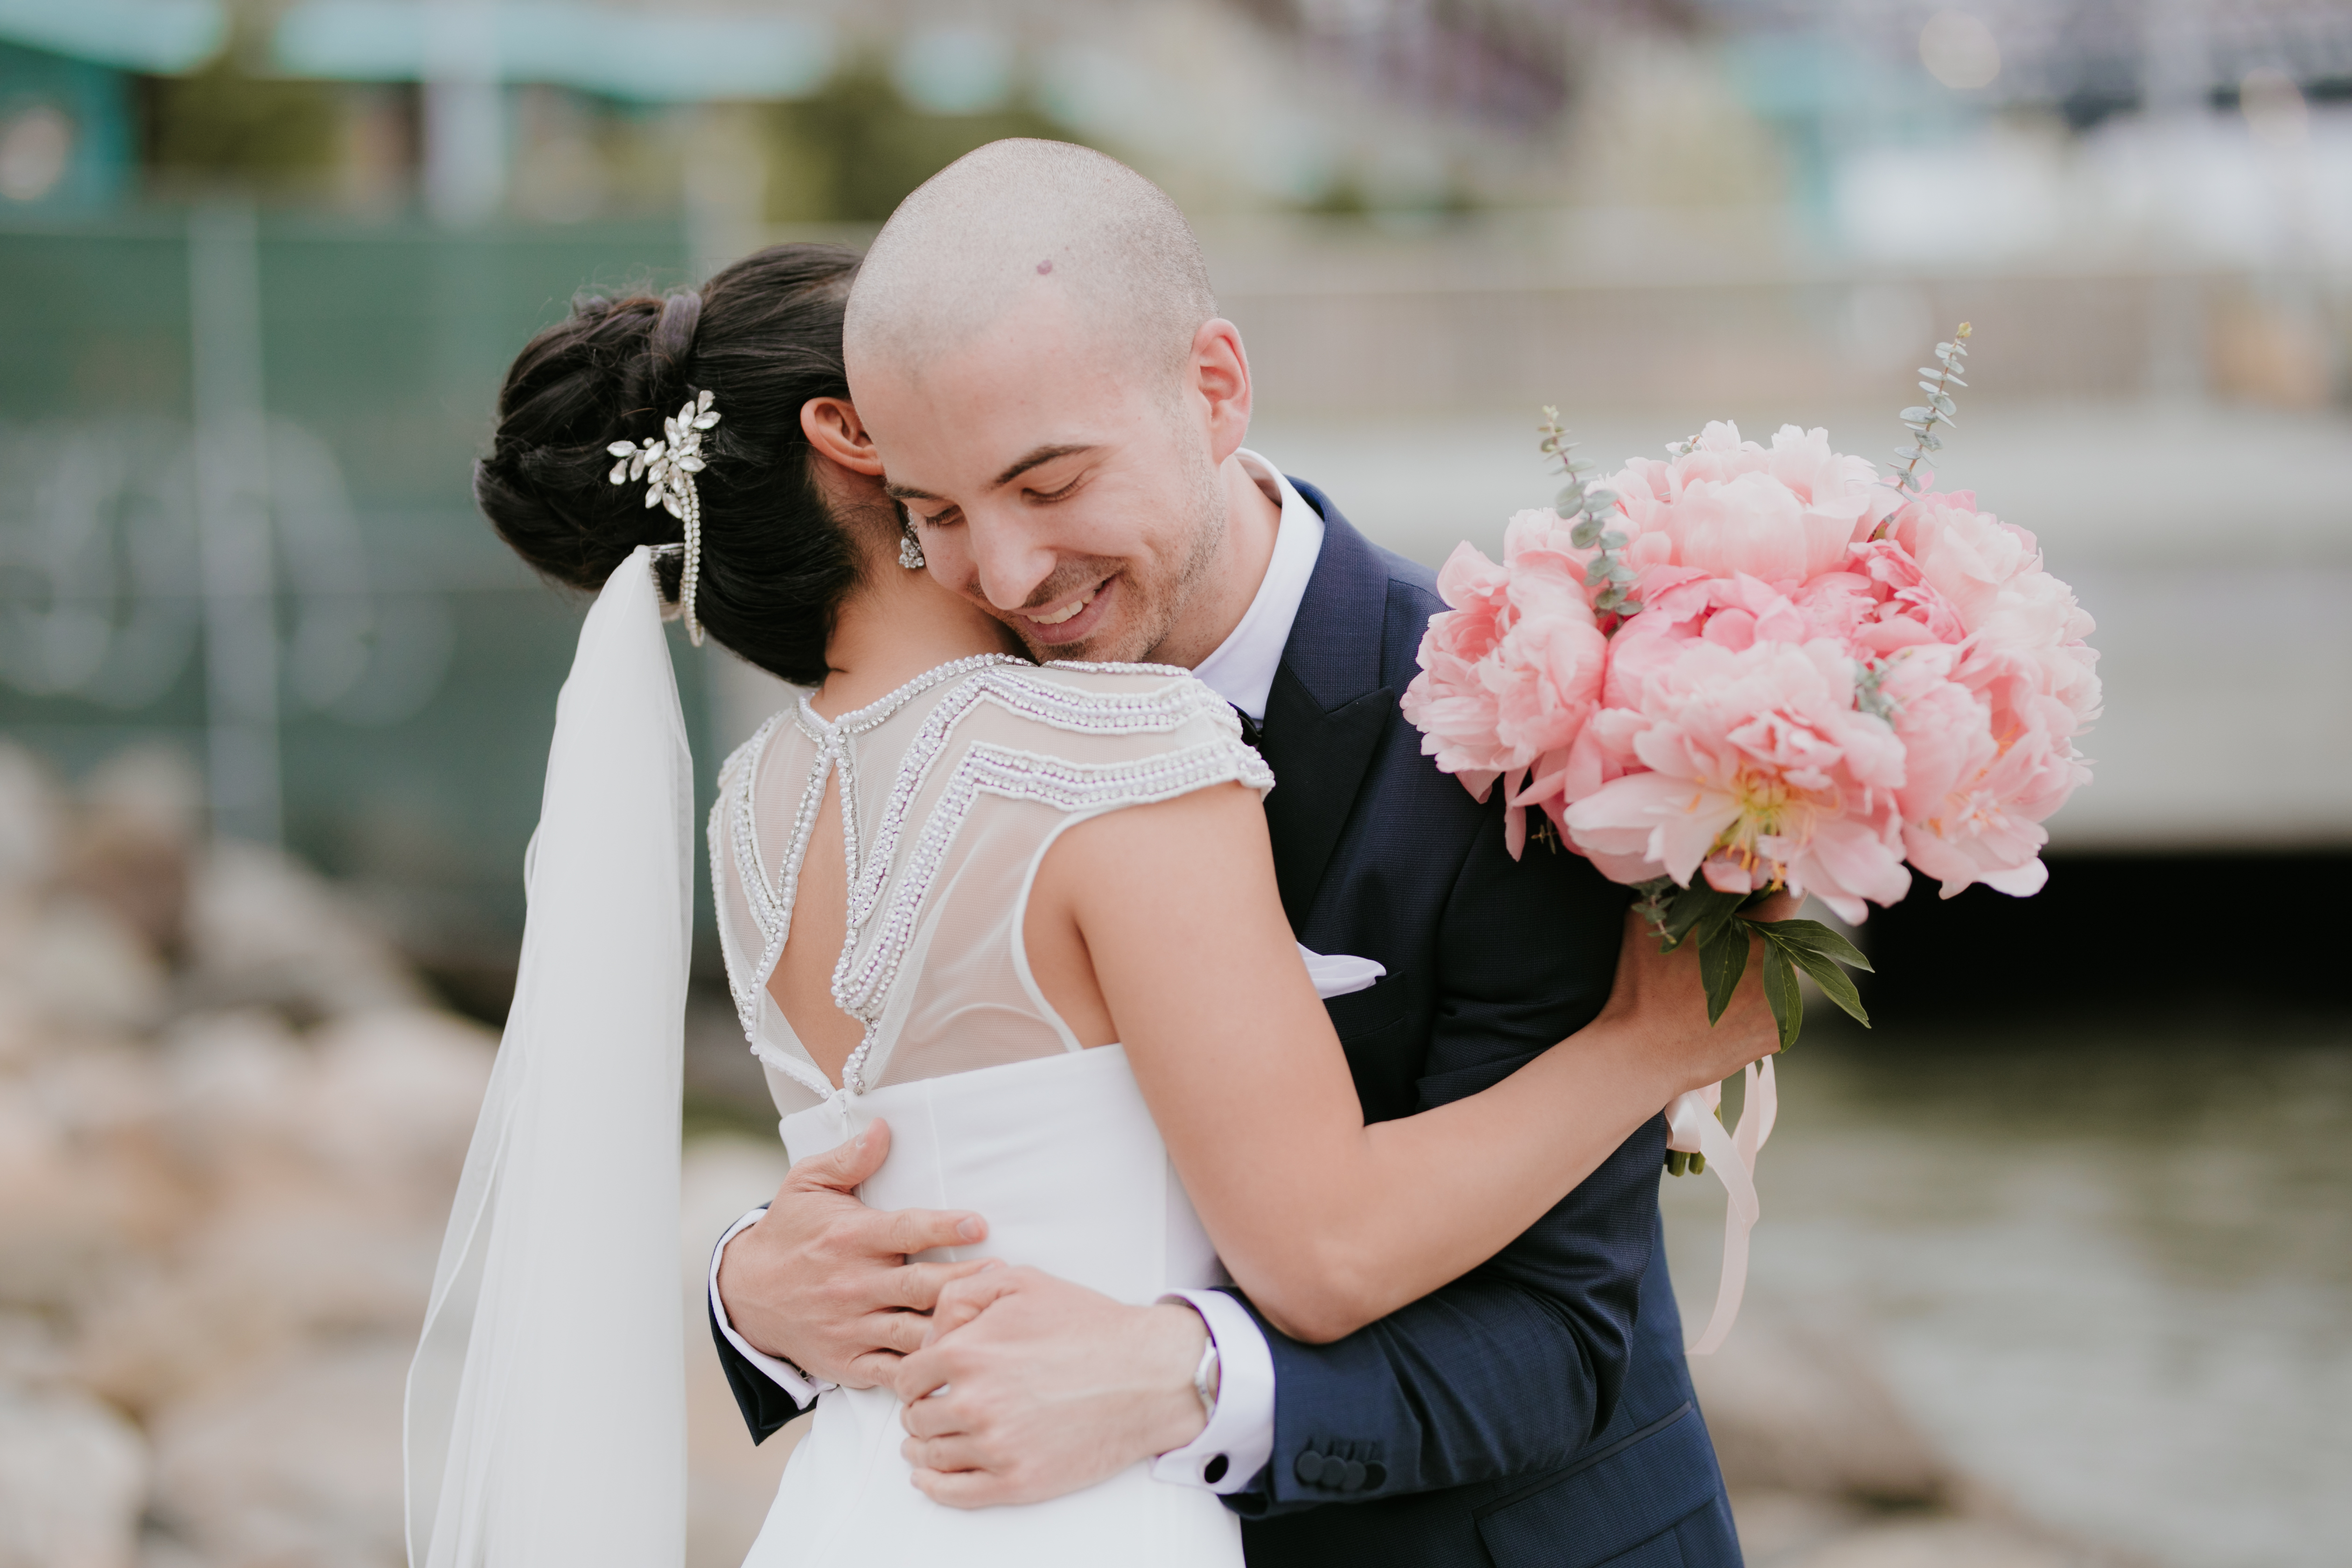 05 06 18 Elodie and Bertrand Wedding 39 - Wedding Video Sweepstakes Winners Wed at The W Loft in Brooklyn